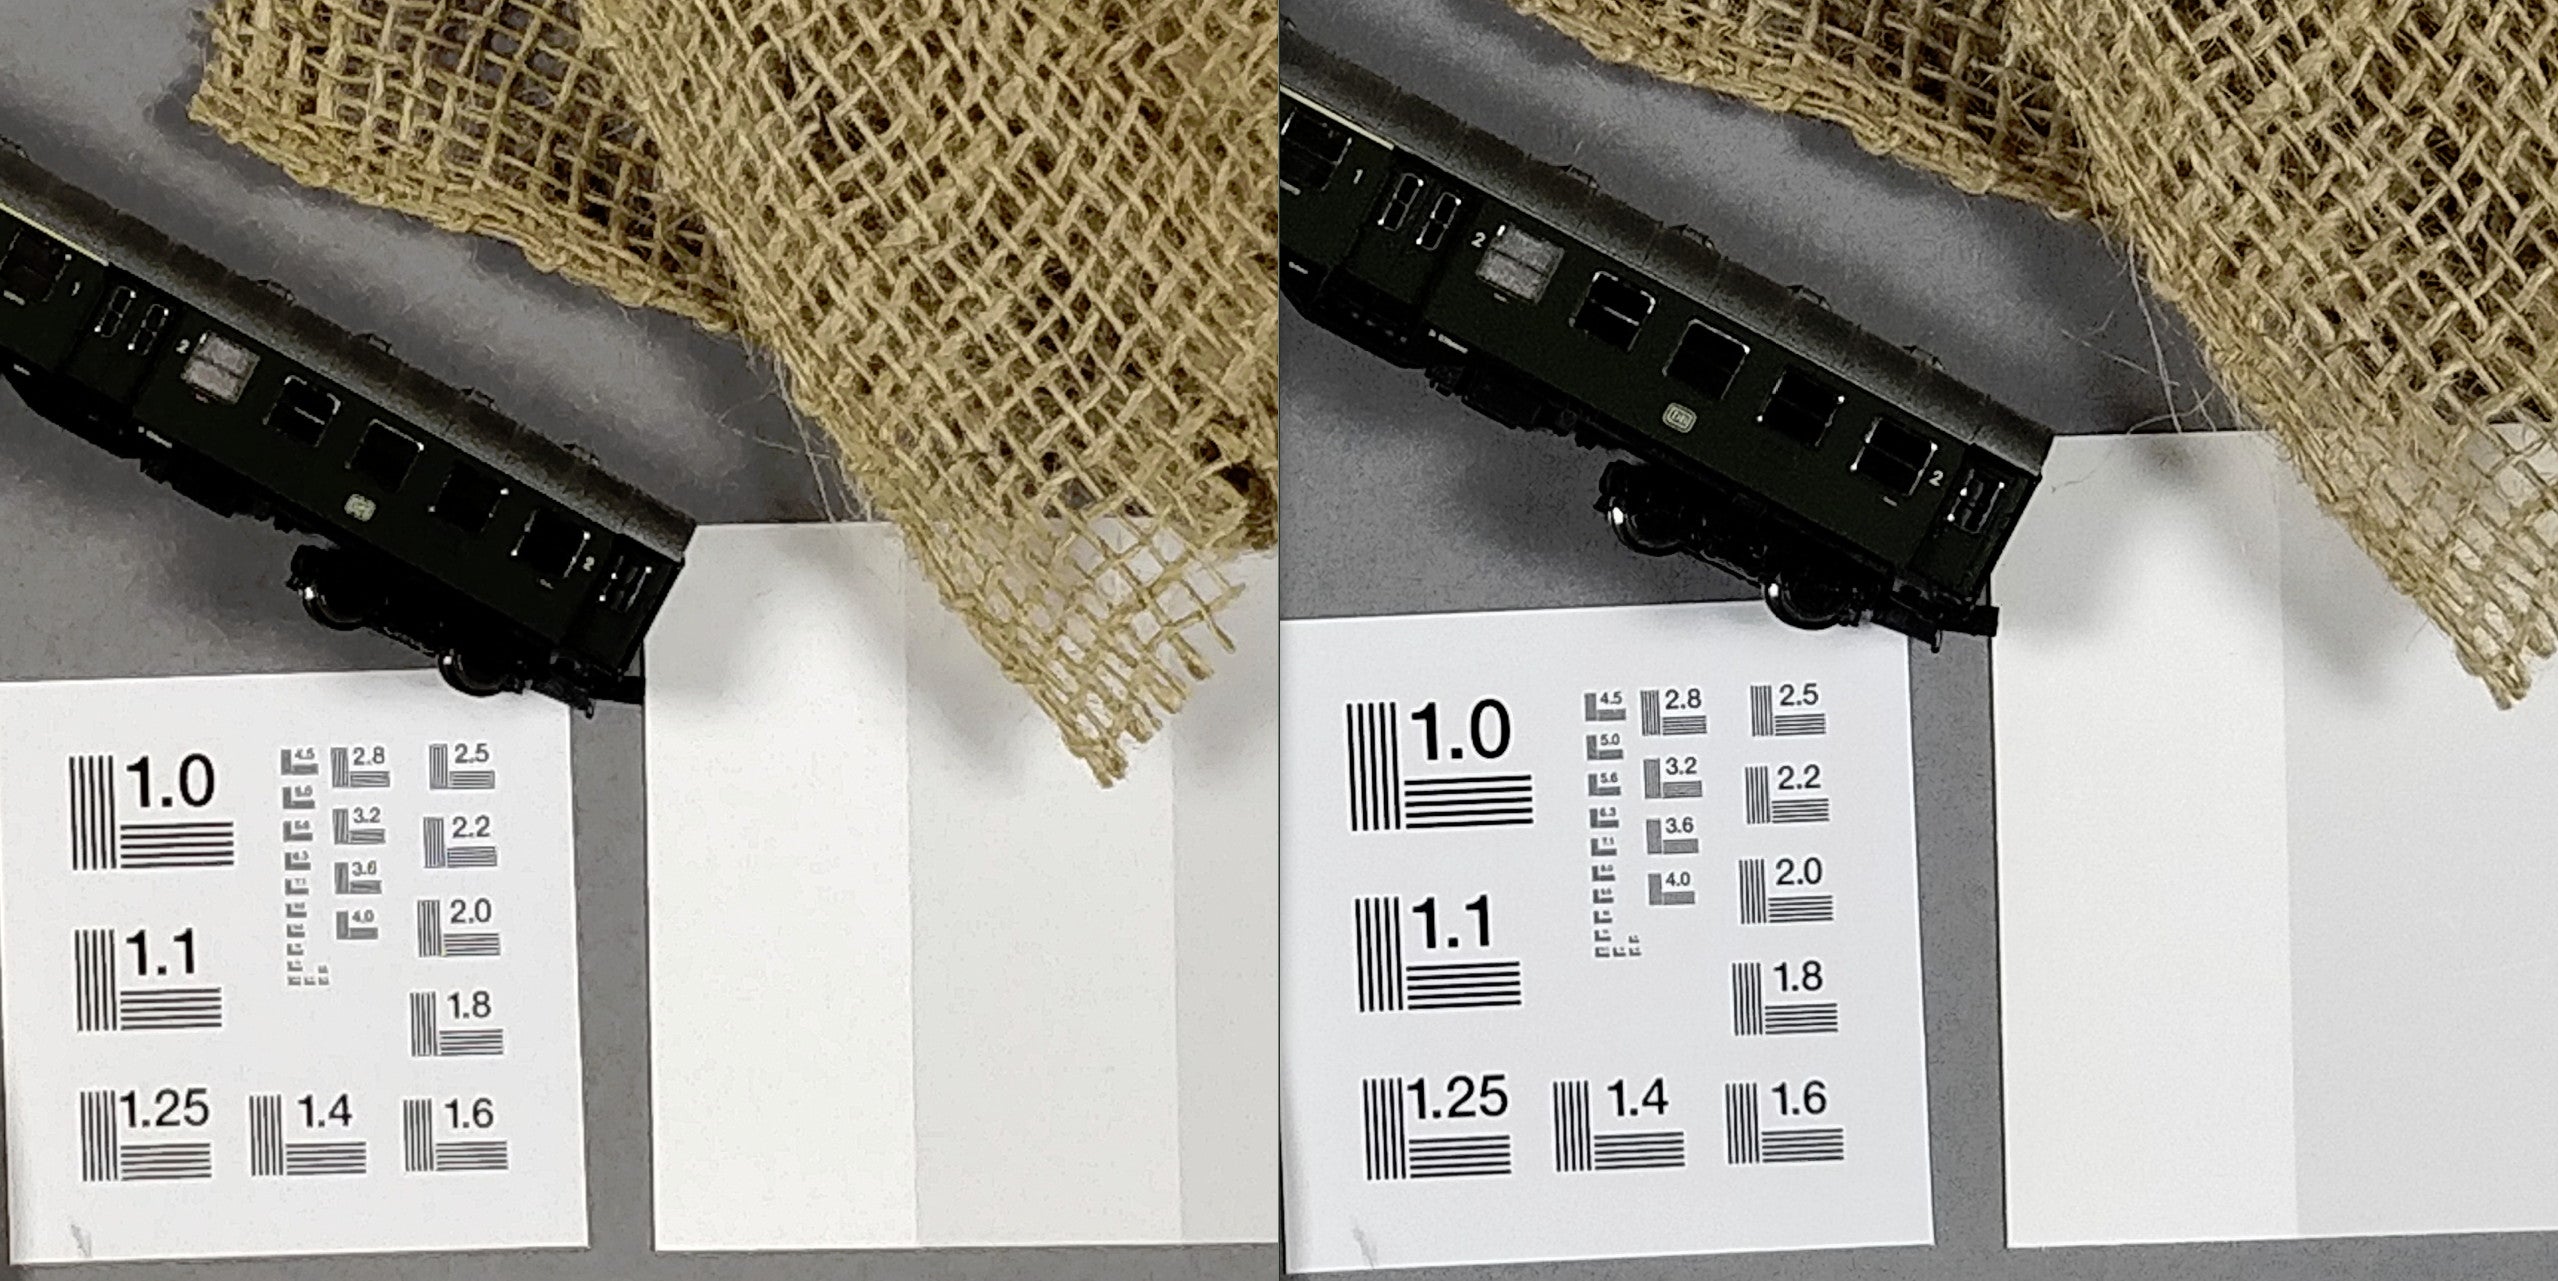 Zoom test - OnePlus 5T digitial zoom (left) vs OnePlus 5 optical zoom (right) - Early OnePlus 5T vs OnePlus 5 camera comparison: No telephoto lens